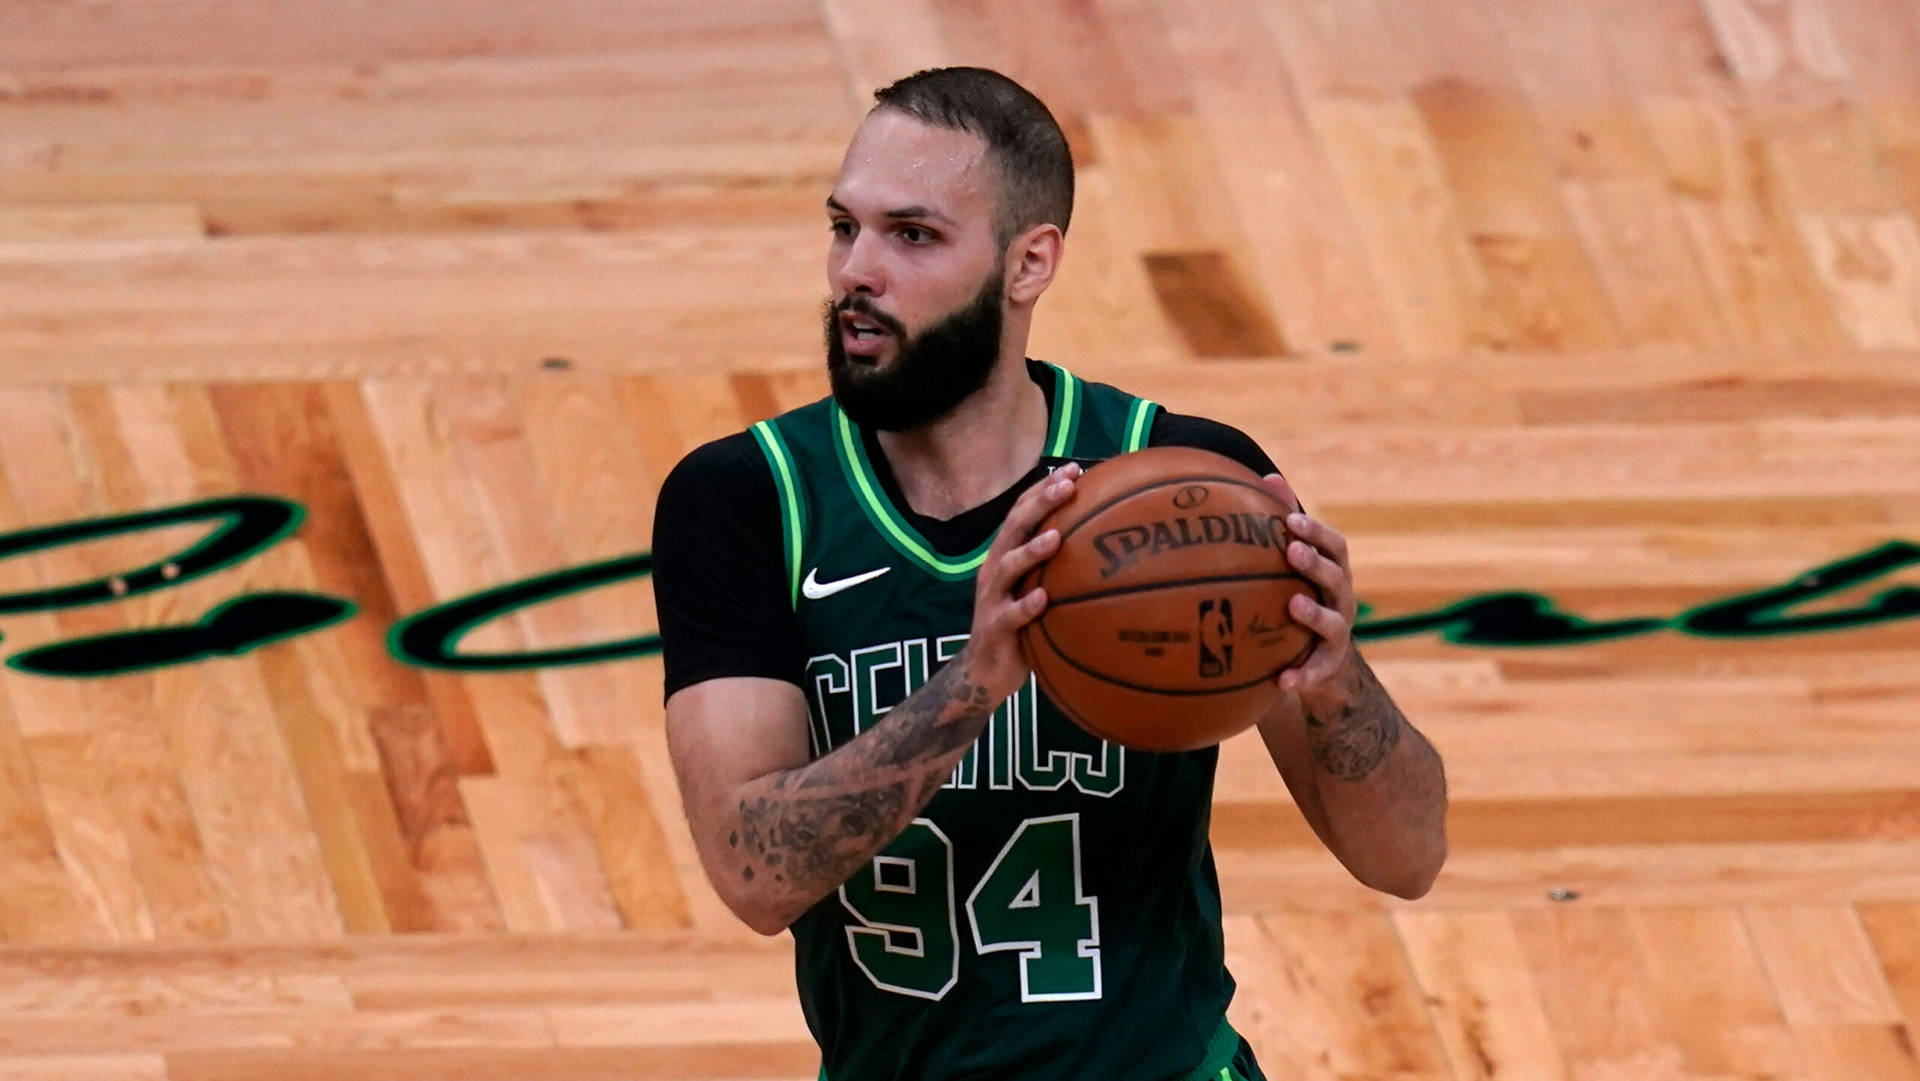 Evanfournier Atrapa El Balón De Los Boston Celtics De La Nba Fondo de pantalla